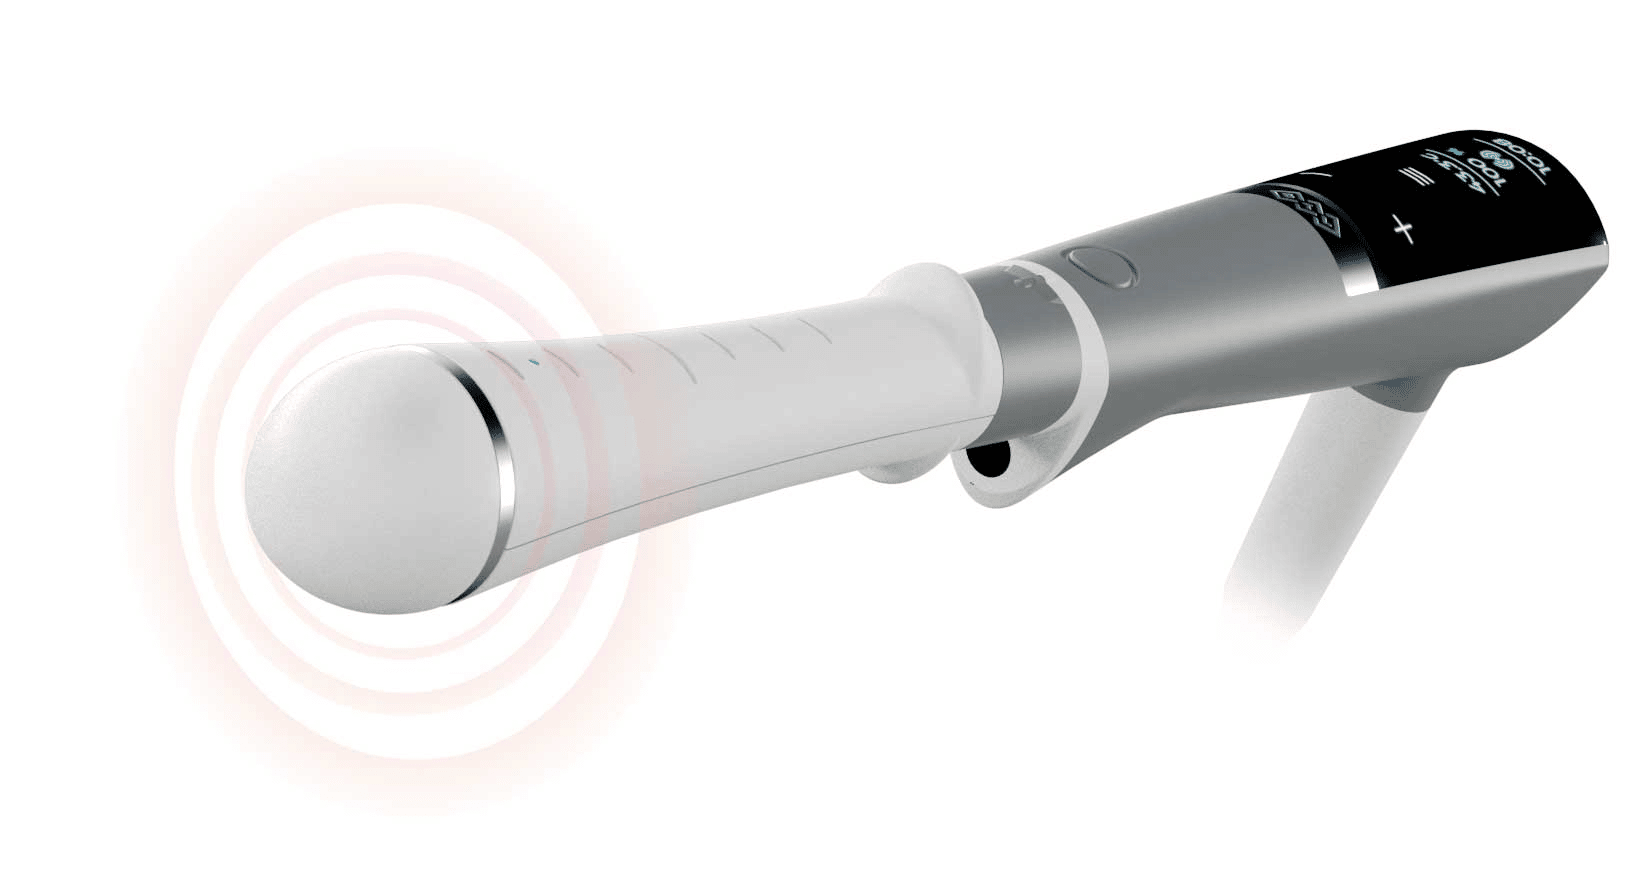 Illustration of a handheld massaging device with vibration waves indicating its function for vaginal rejuvenation.